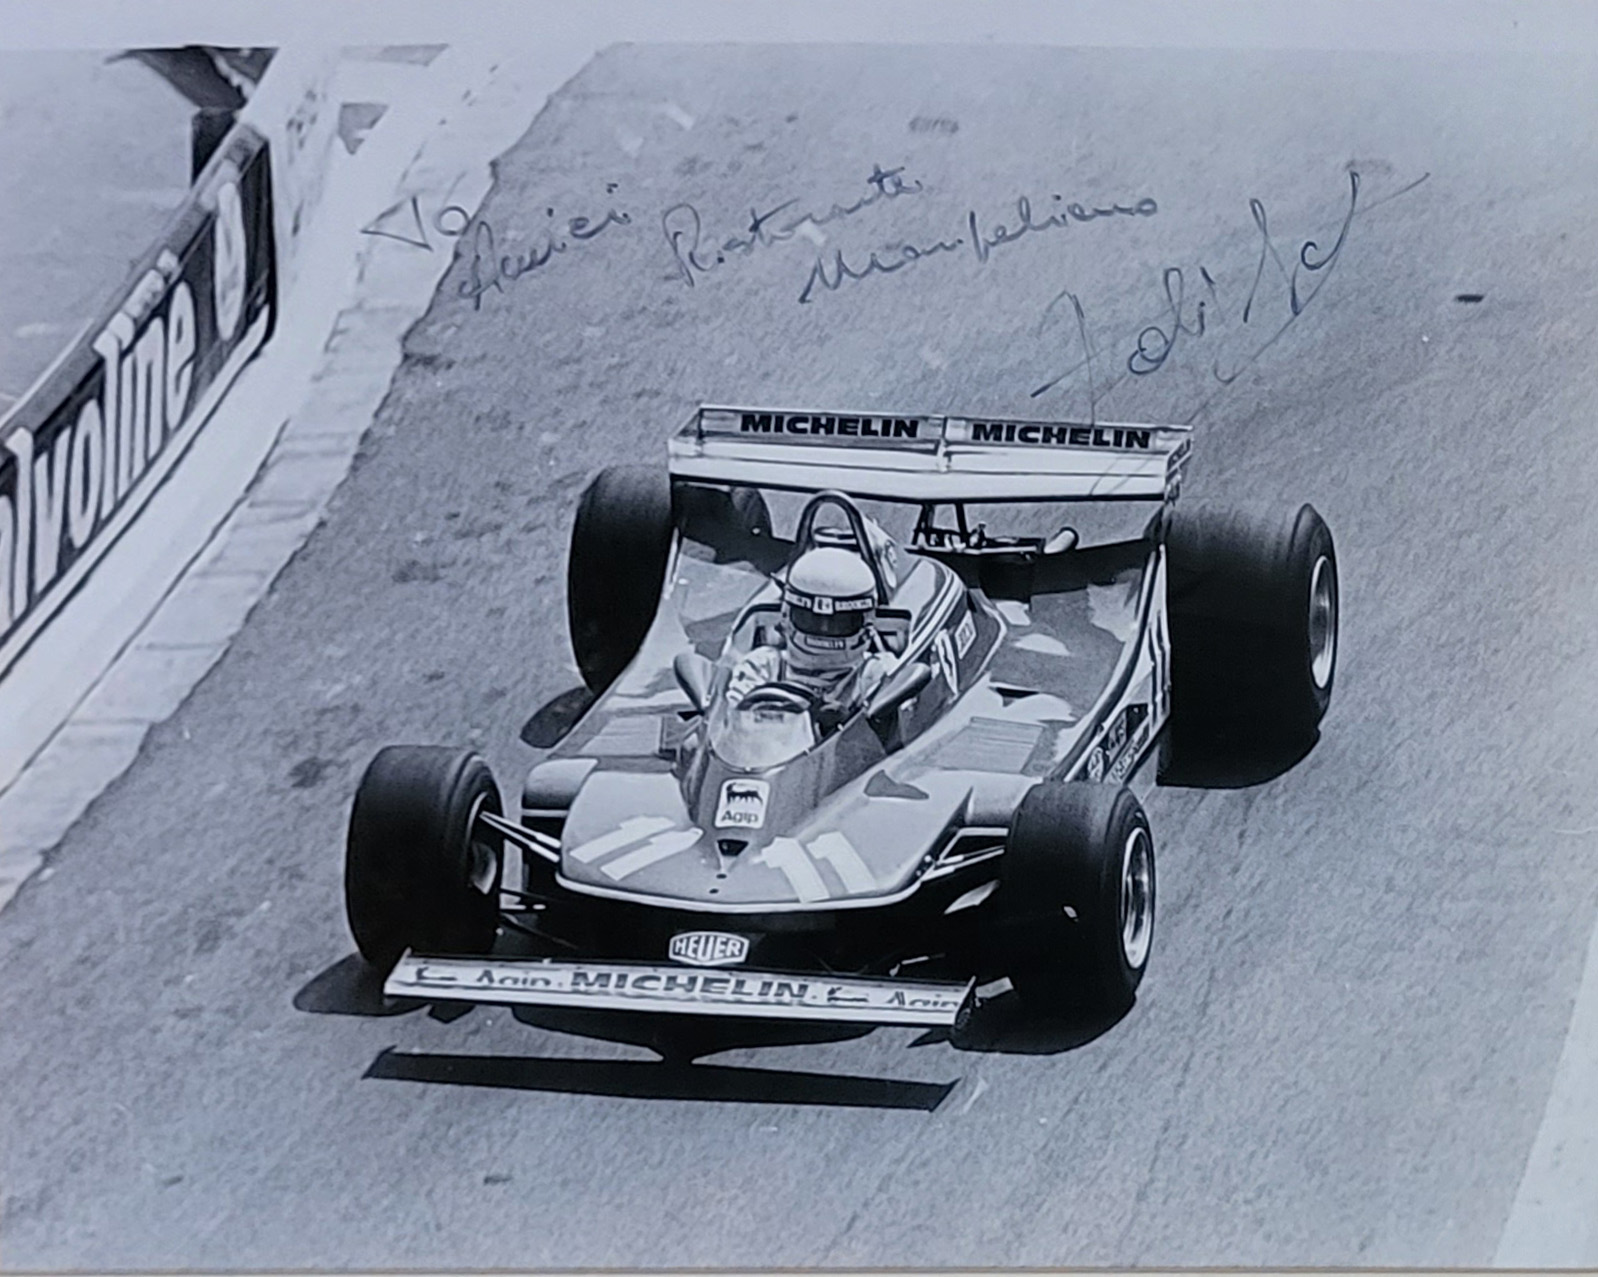 JODY SHECKTER, AN AUTOGRAPHED ‘FORMULA 1 MOTORSPORT’ PHOTOGRAPH Ferrari racing car, signed 'To